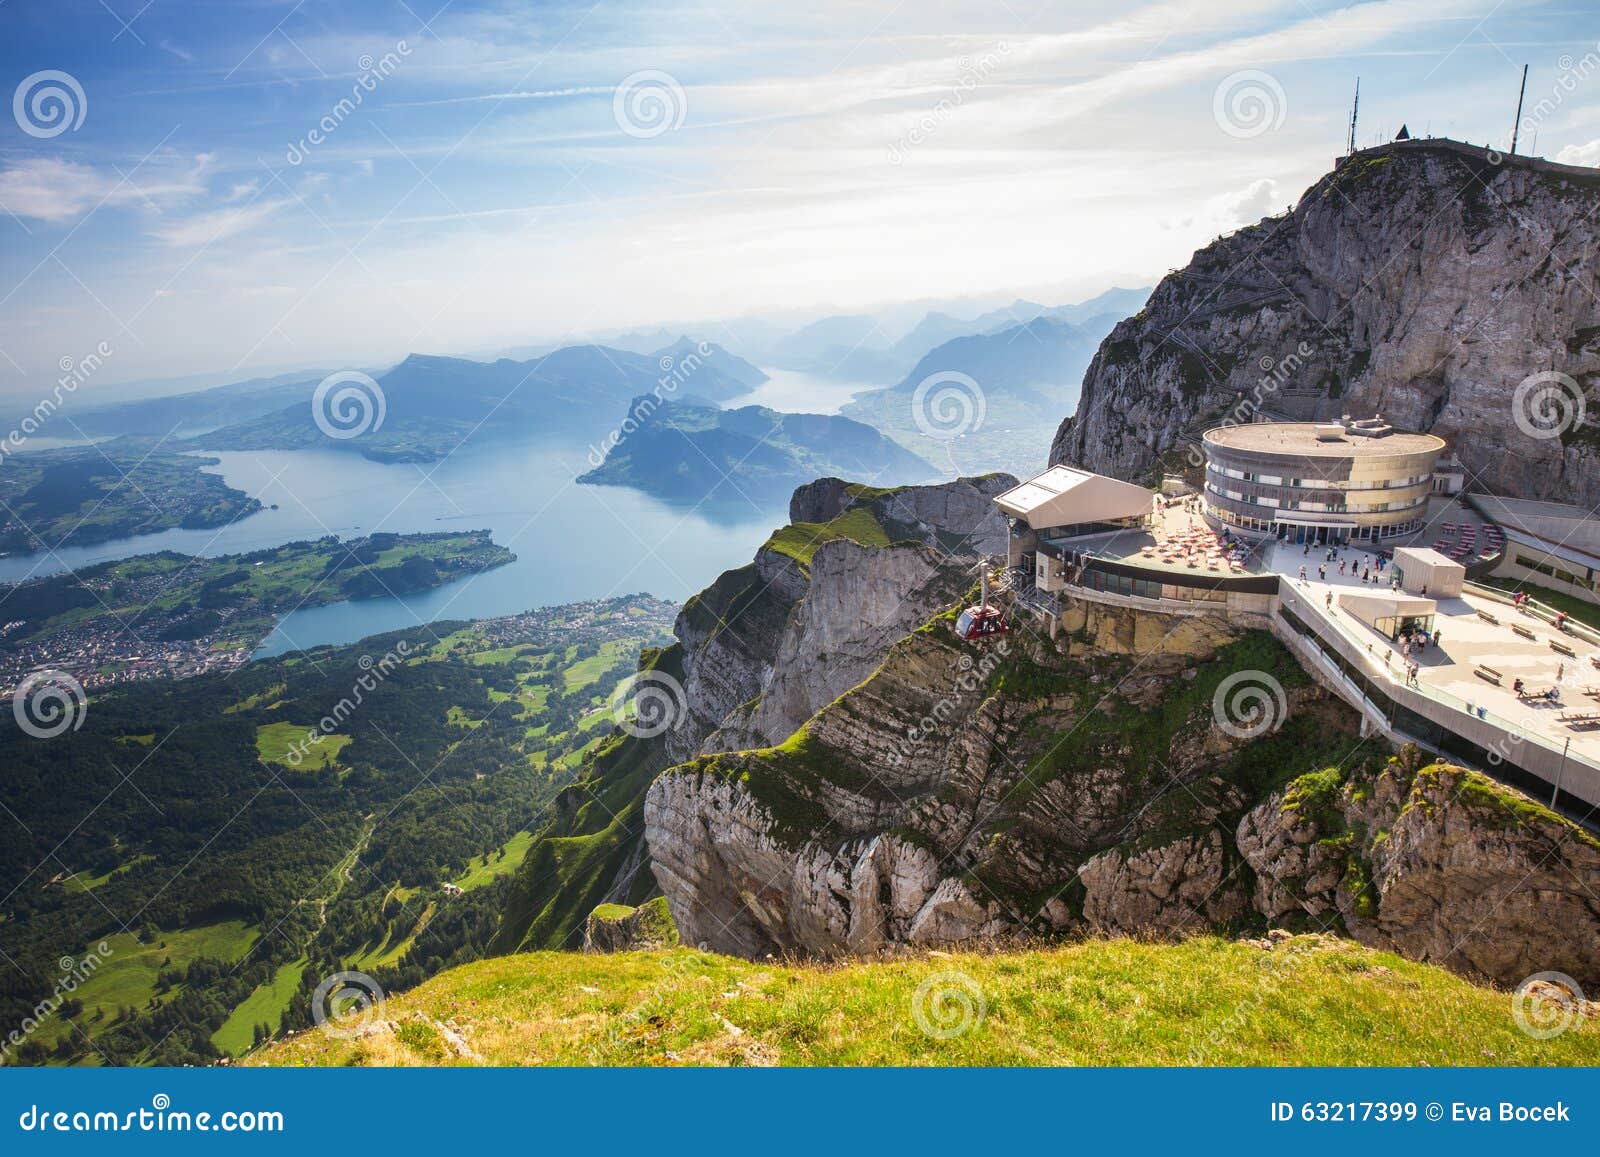 Pilatus Luzern Switzerland August 6 2015 Pilatus World Editorial Stock Image Image Of Mount Mountain 63217399